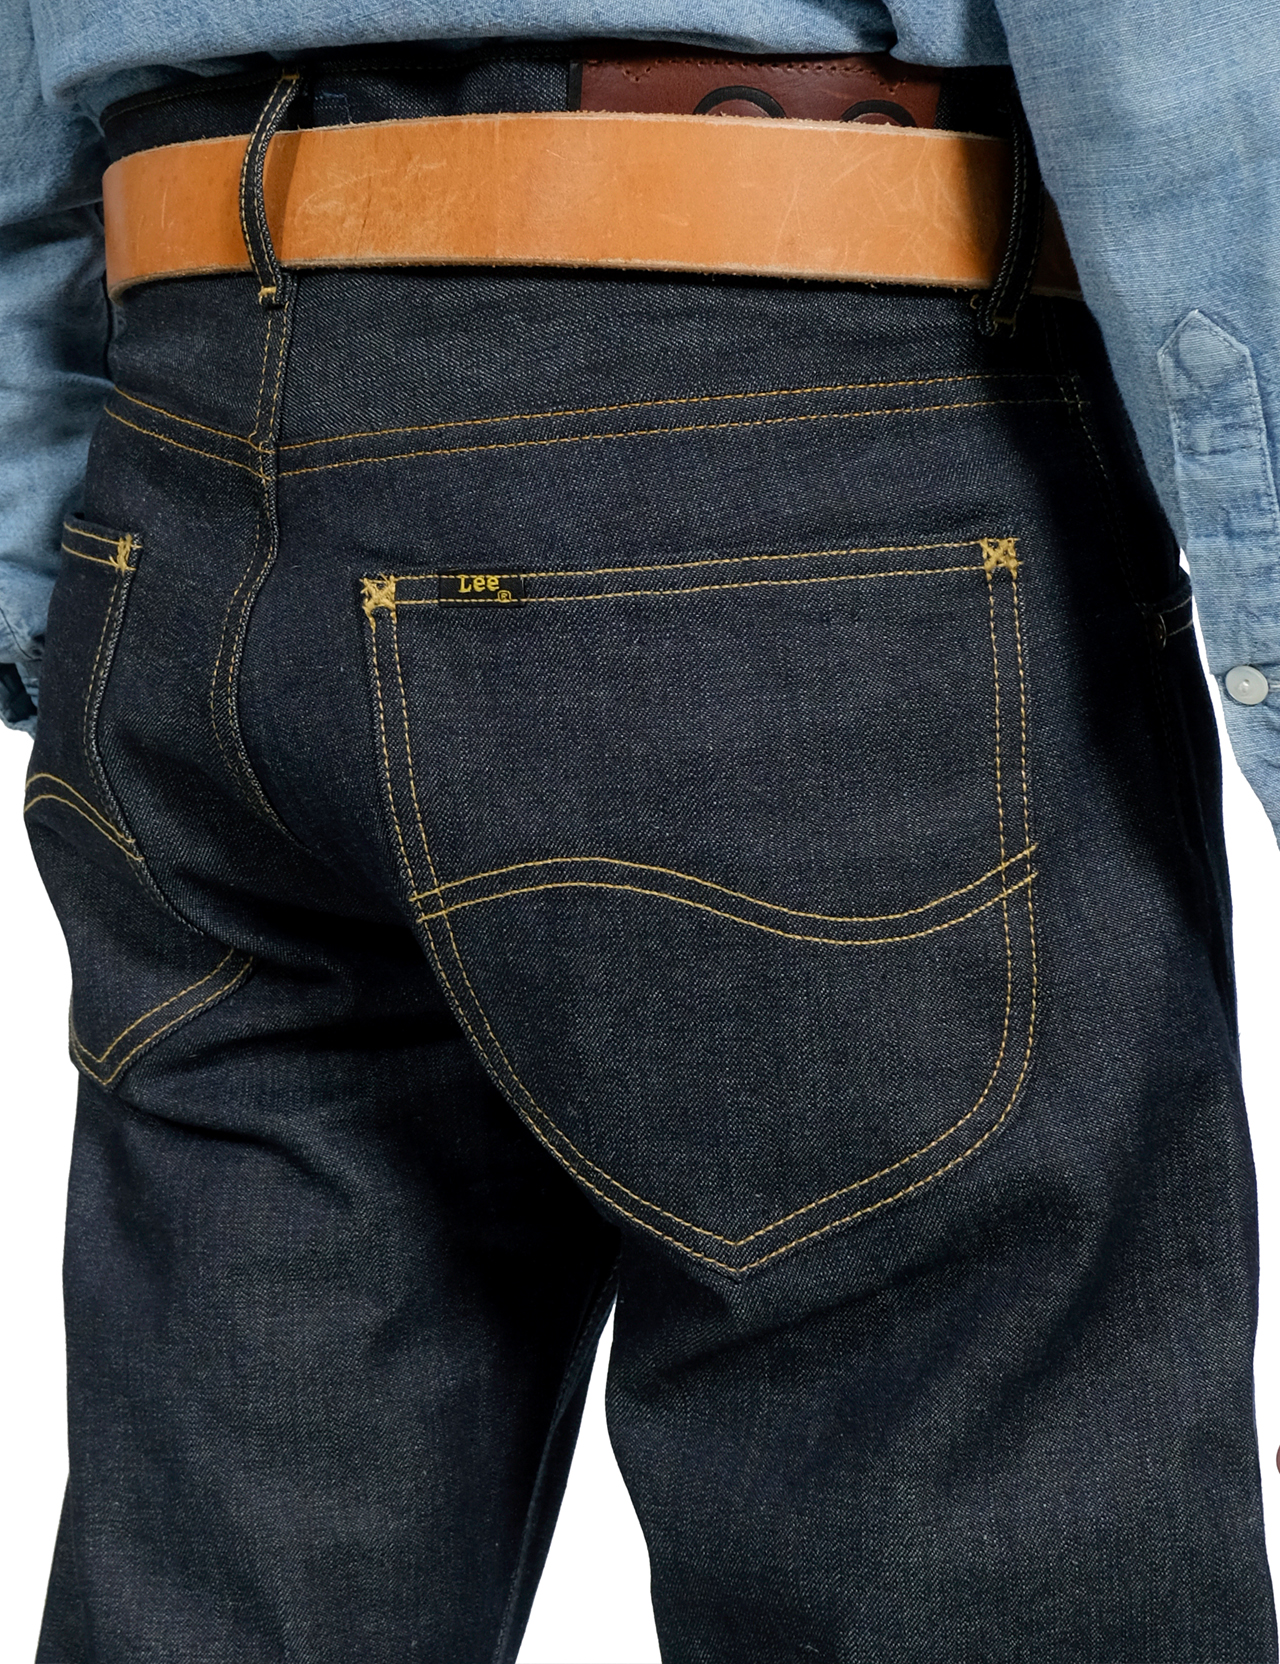 Lee - 101 Z Jeans Cotton Hemp Selvedge Denim - 11.5 oz